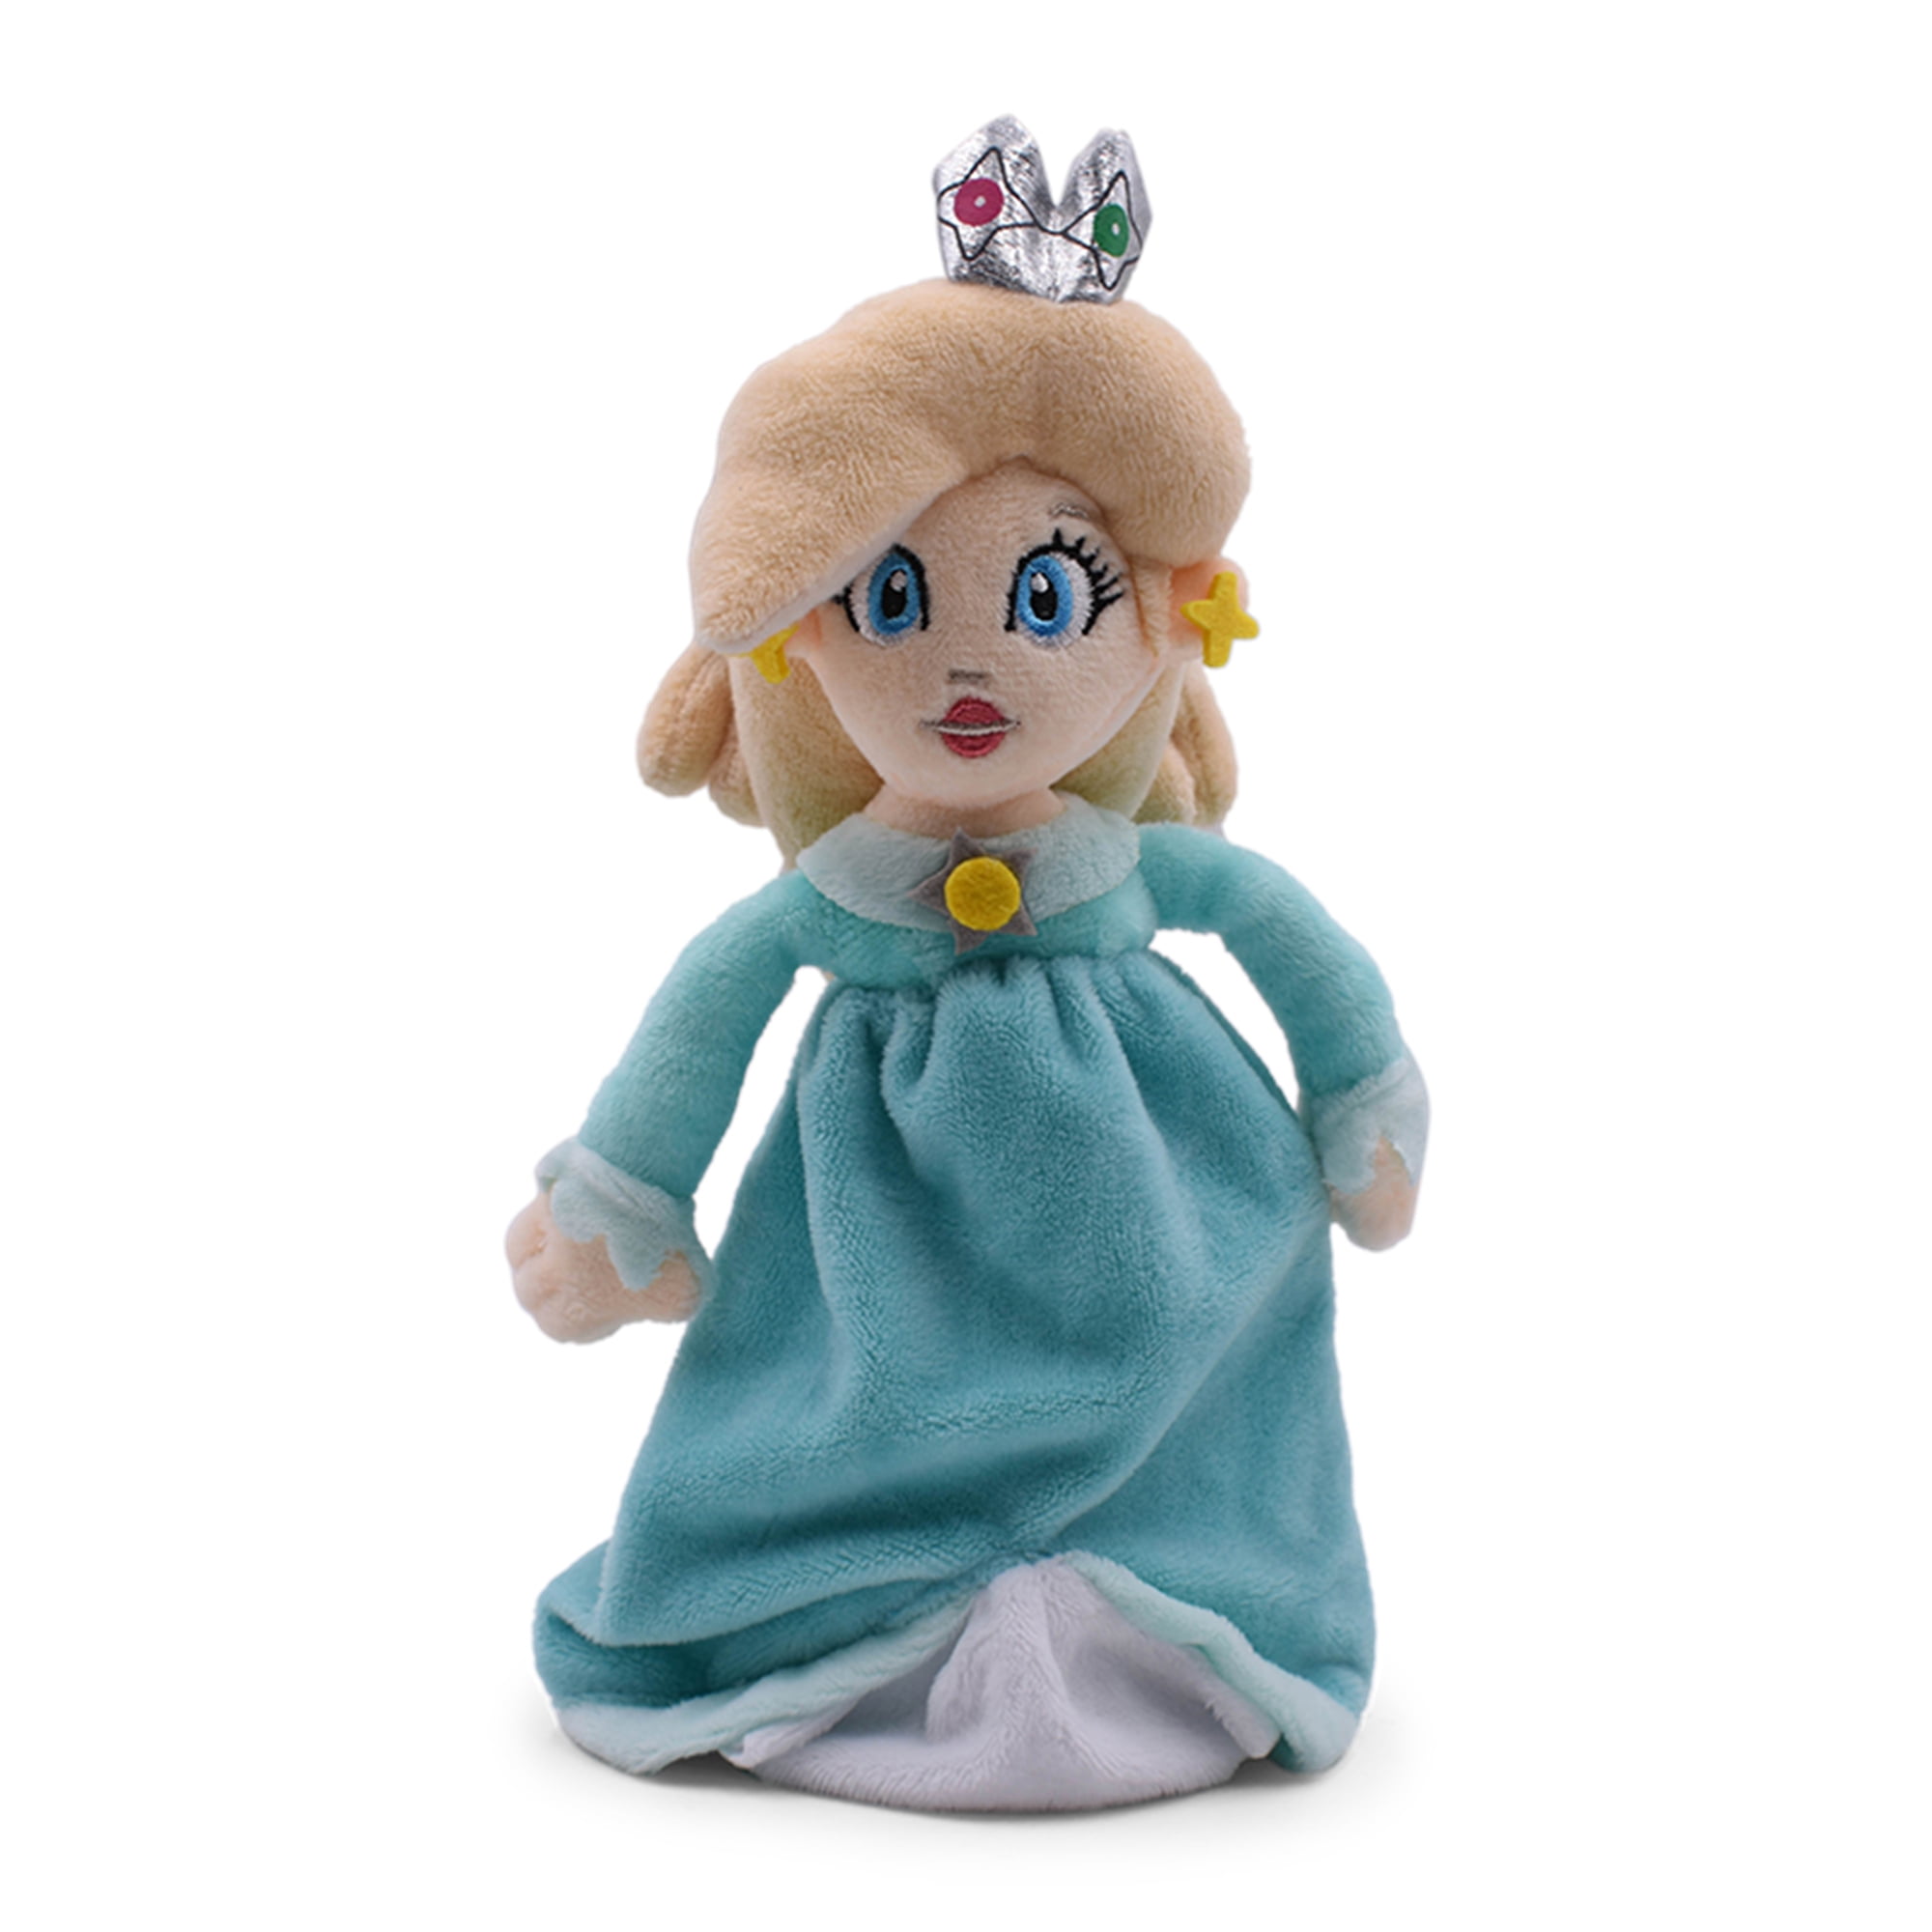 2PCS Super Mario Bros Mario Princess Daisy and Peach Plush Doll Figure Toy 7inch 